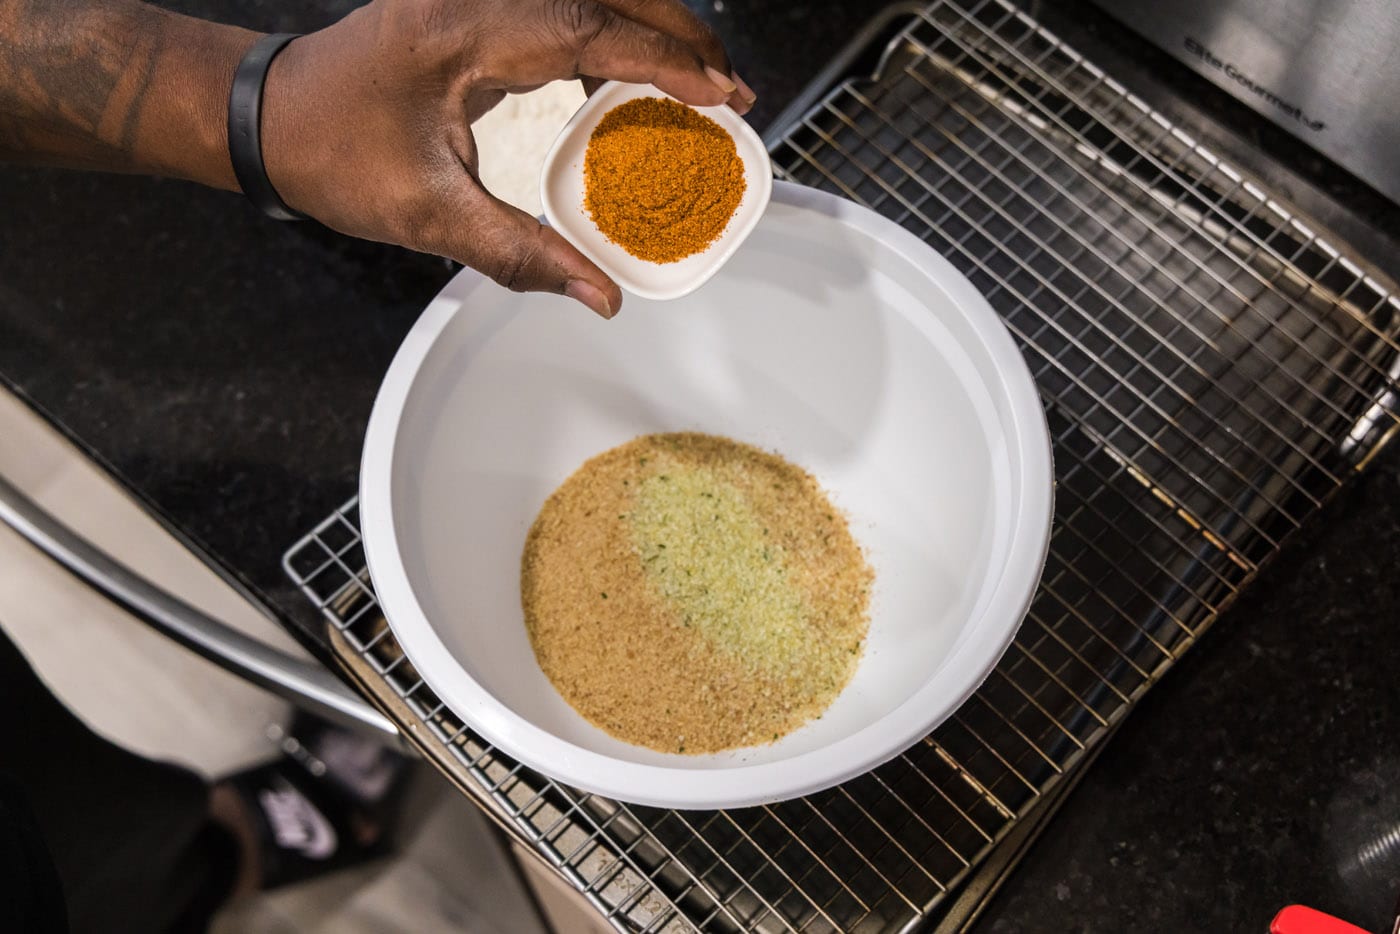 breadcrumbs, garlic salt, and old bay seasoning in a mixing bowl